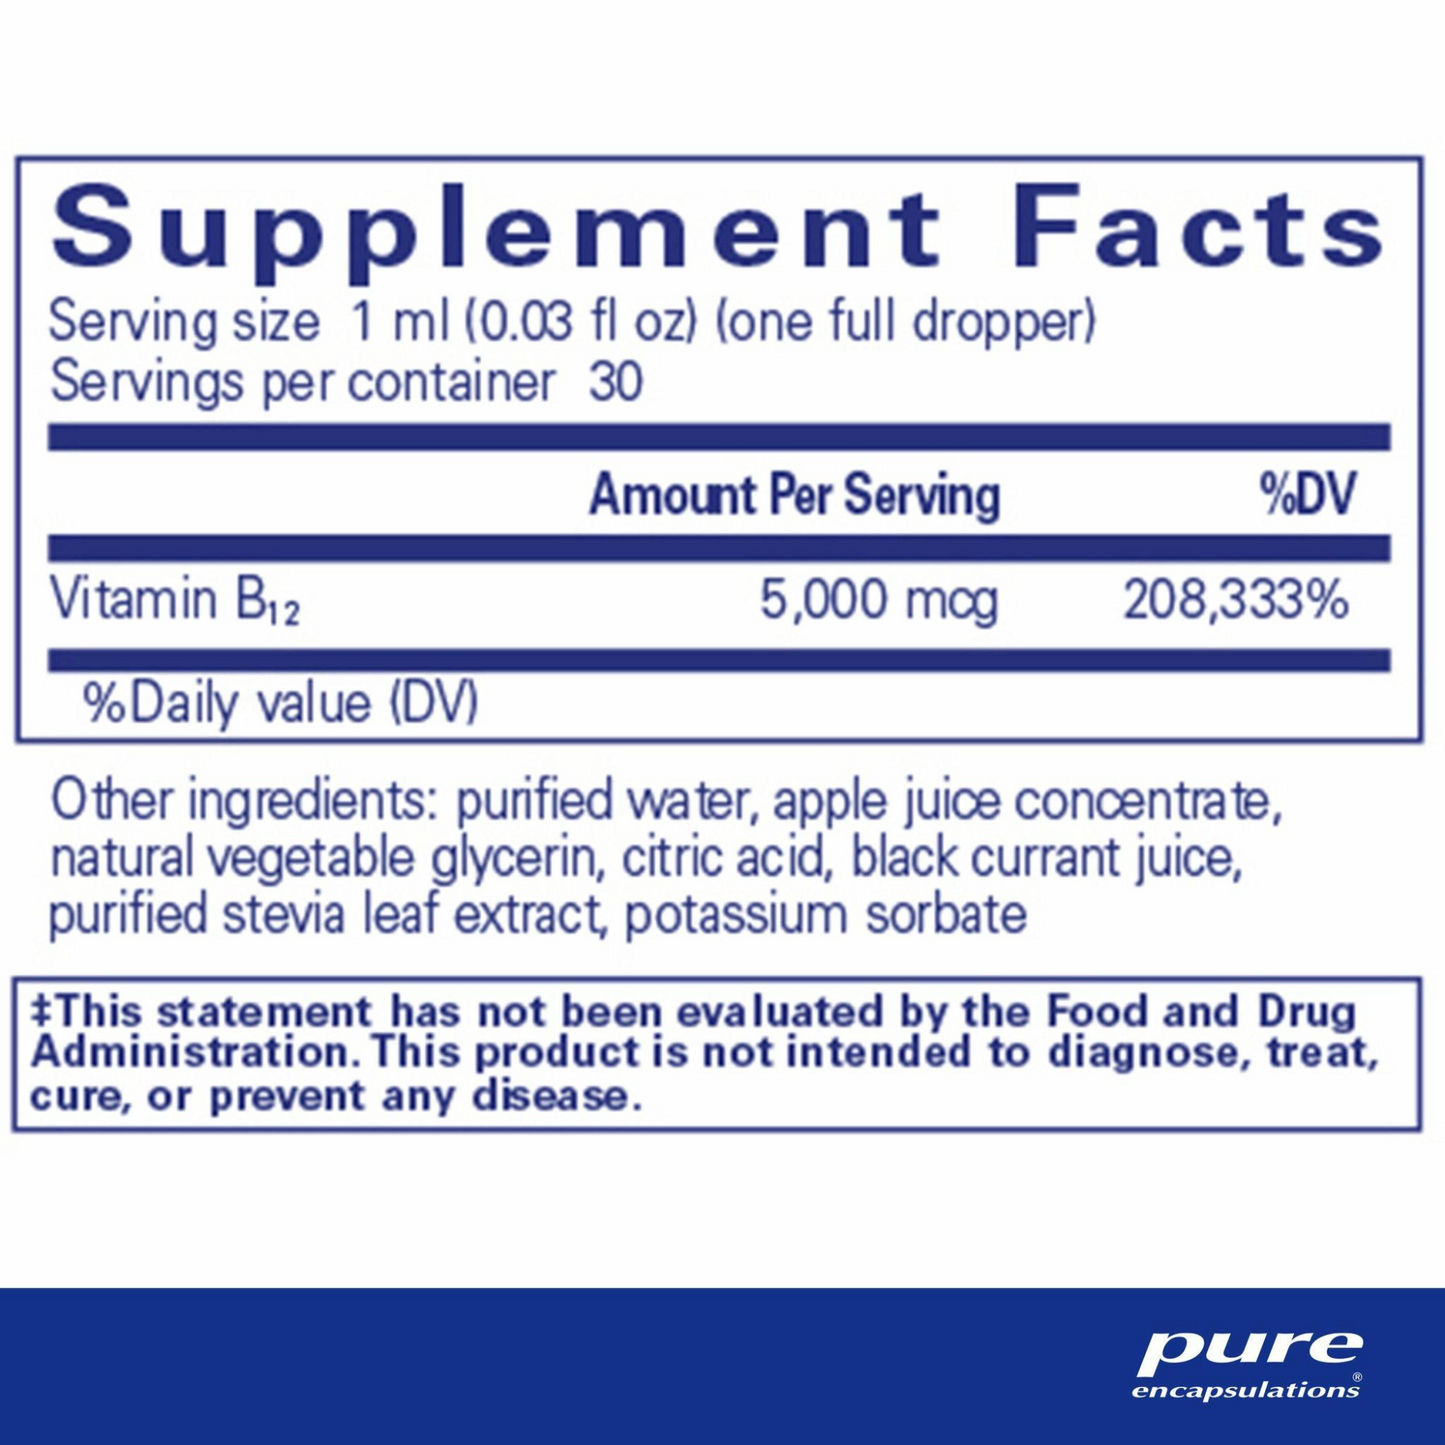 Pure Encapsulations B12 5,000 liquid (1 fl oz) #10085784